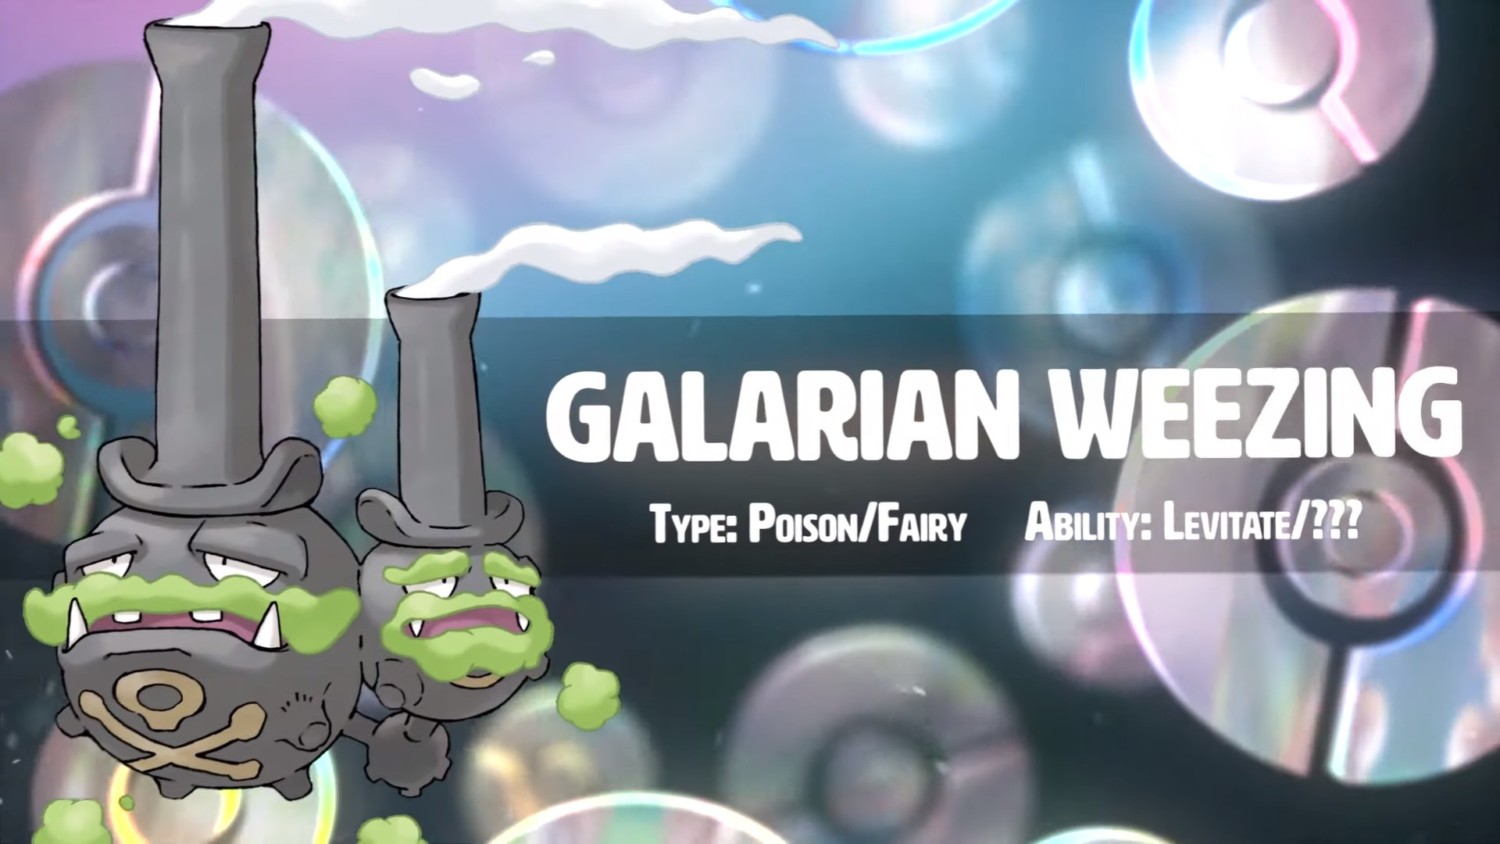 Pokémon Sword and Shield' Galarian Forms: How to Evolve Each New Pokémon